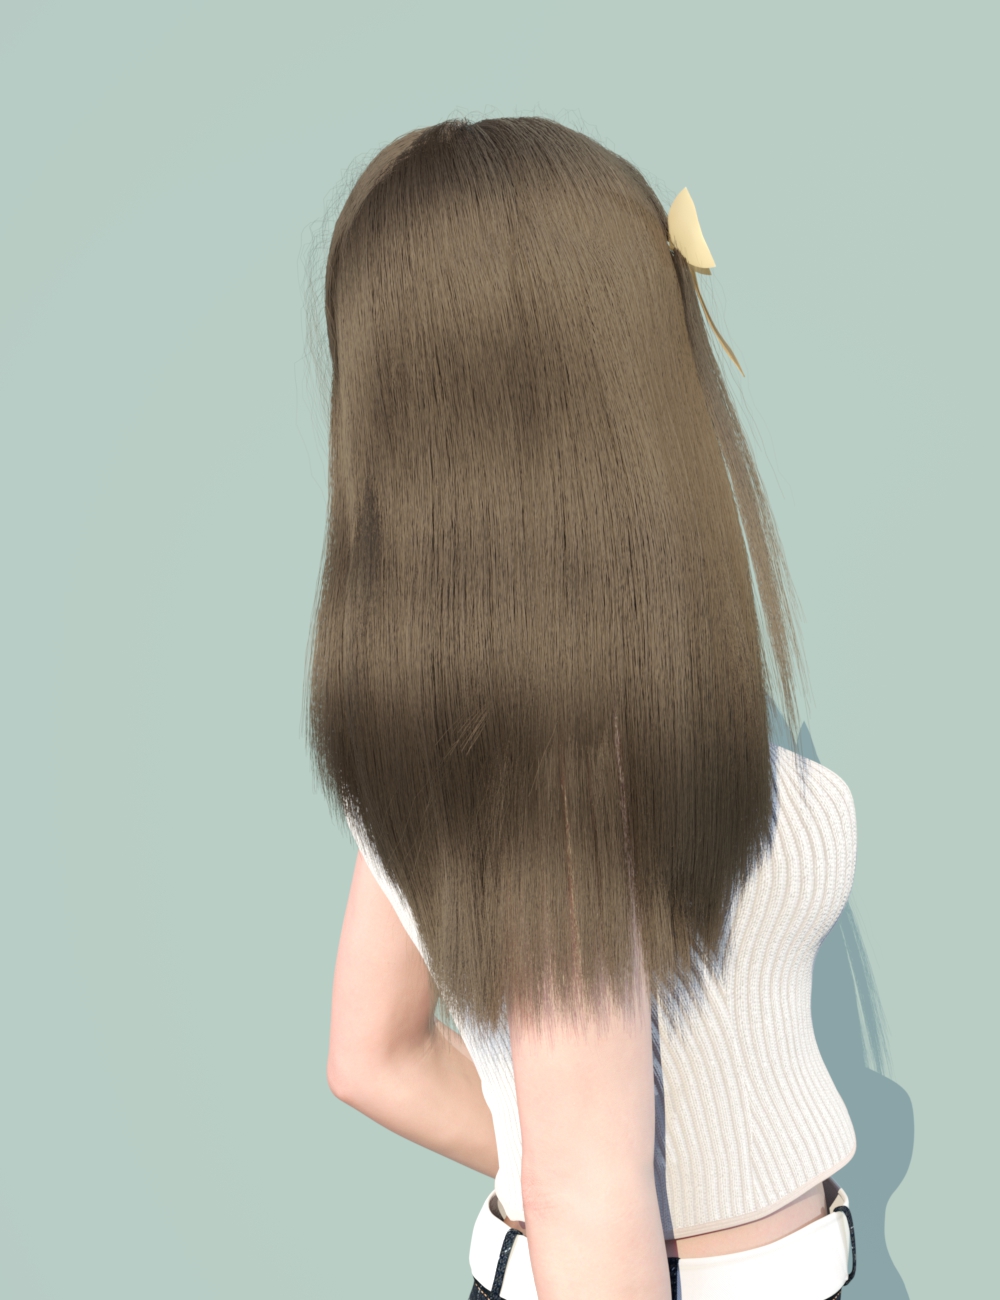 dForce Difa Hair for Genesis 8 Female(s) by: Panda, 3D Models by Daz 3D